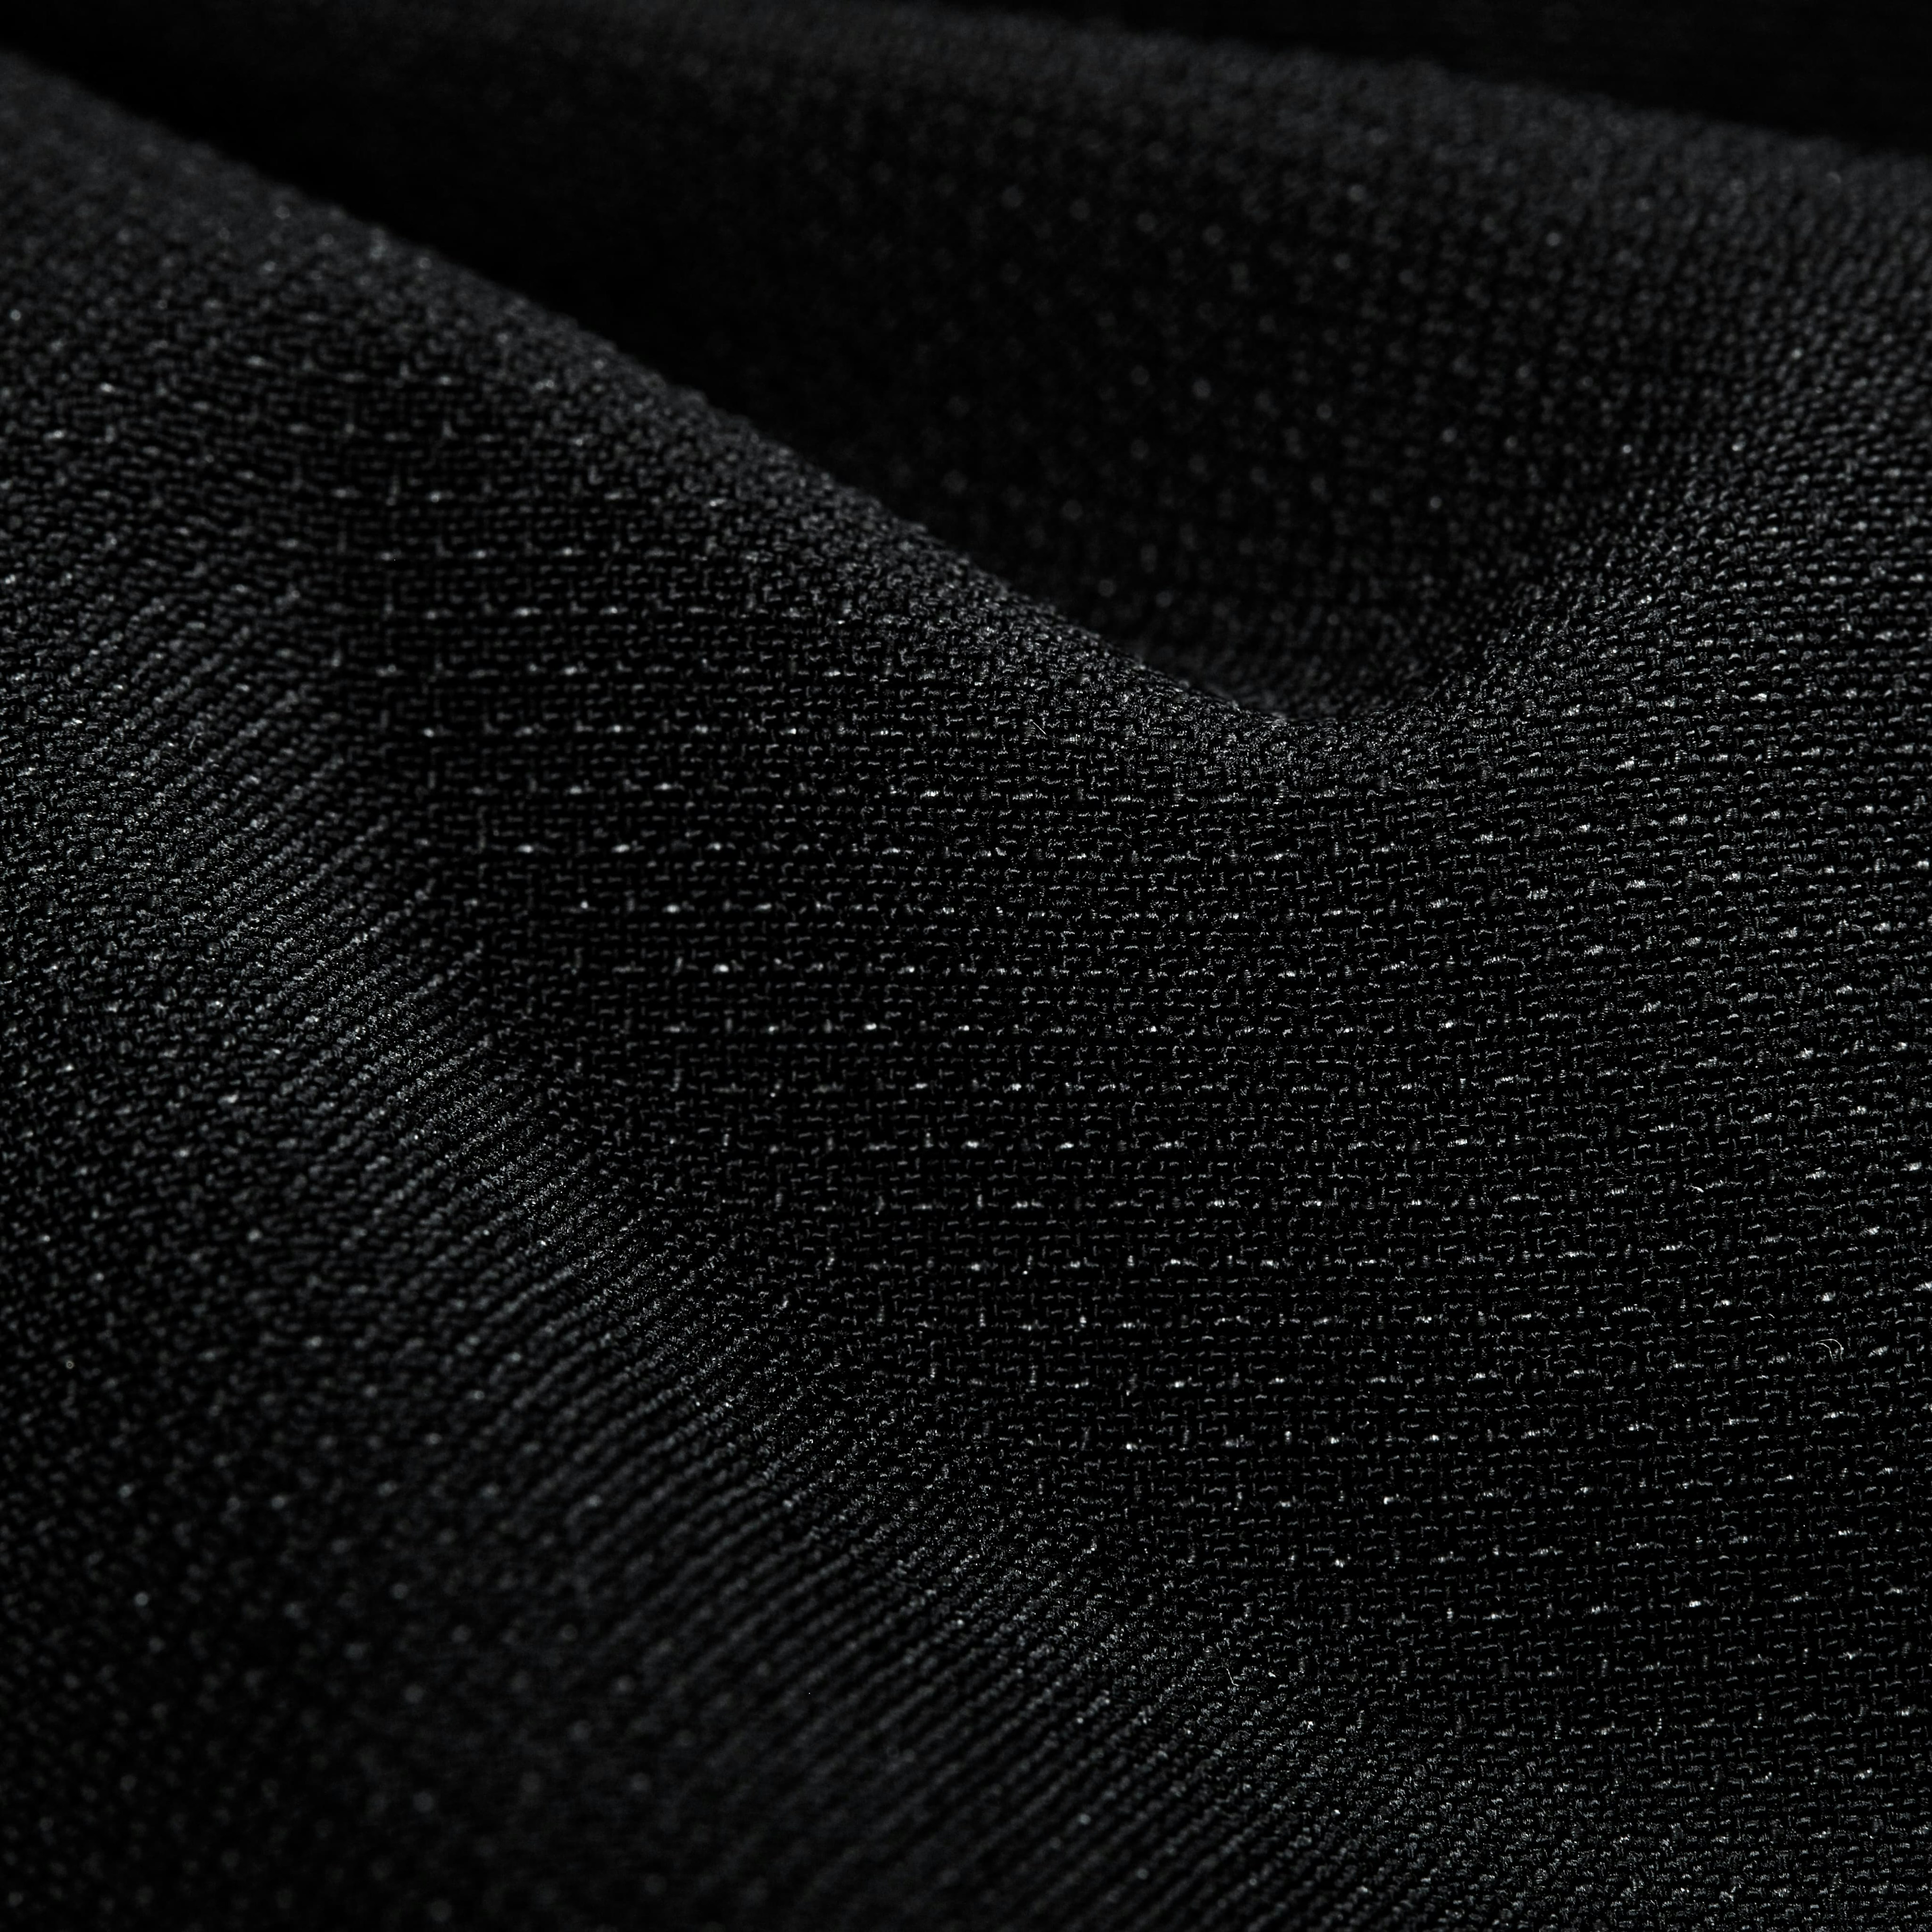 Fabric in black